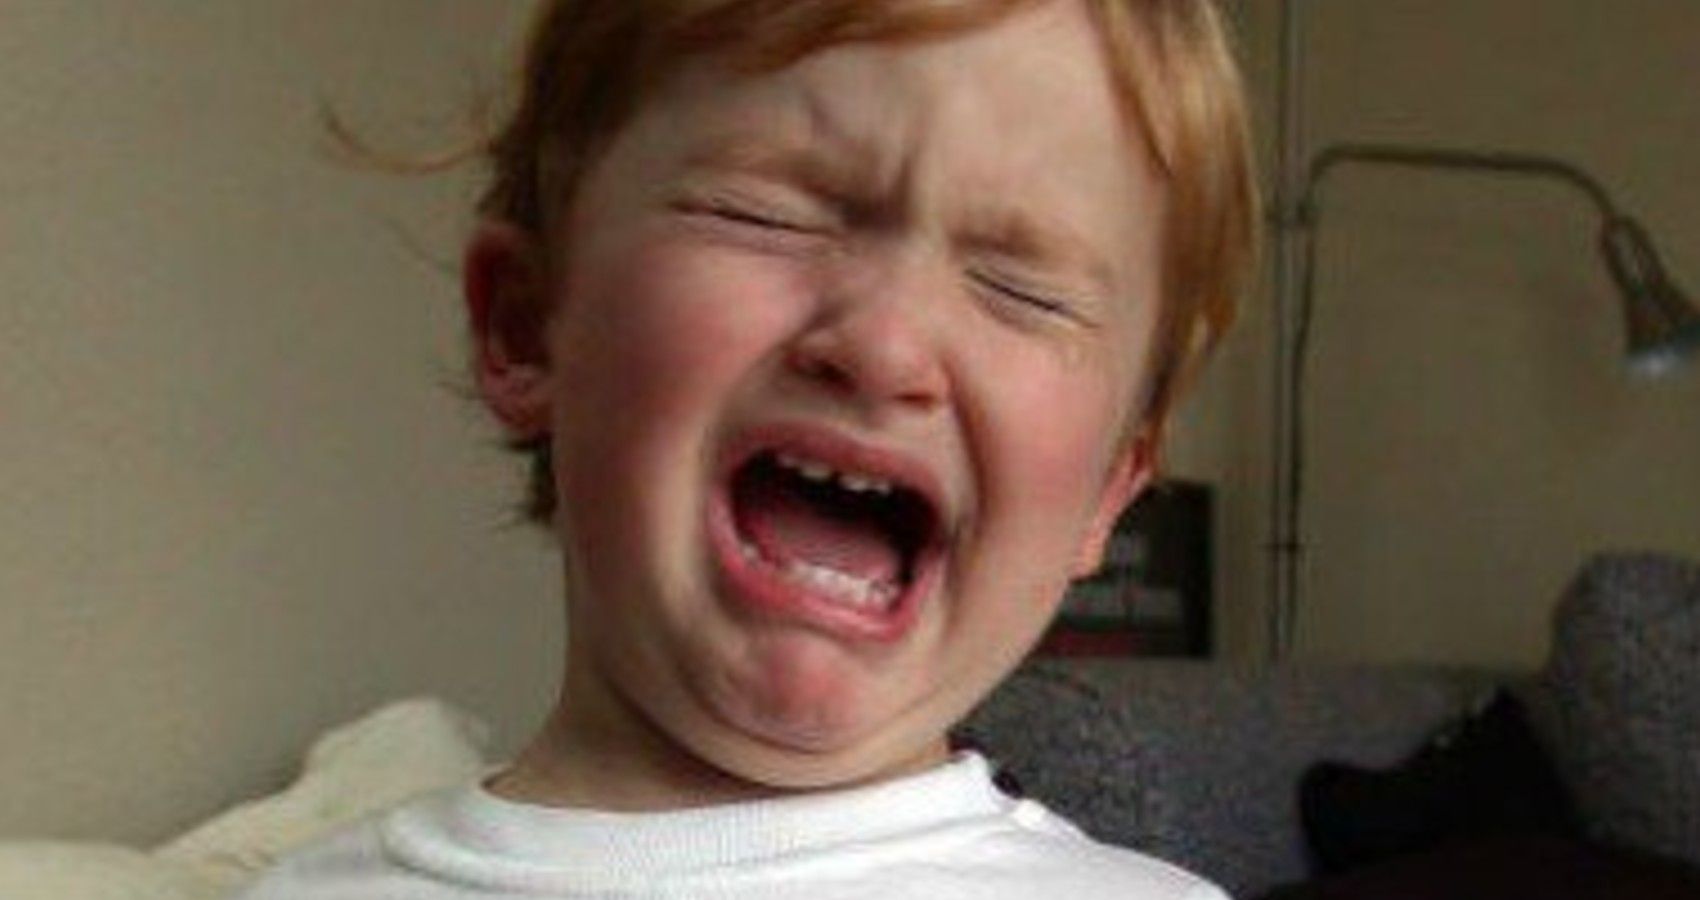 A child throwing a temper tantrum